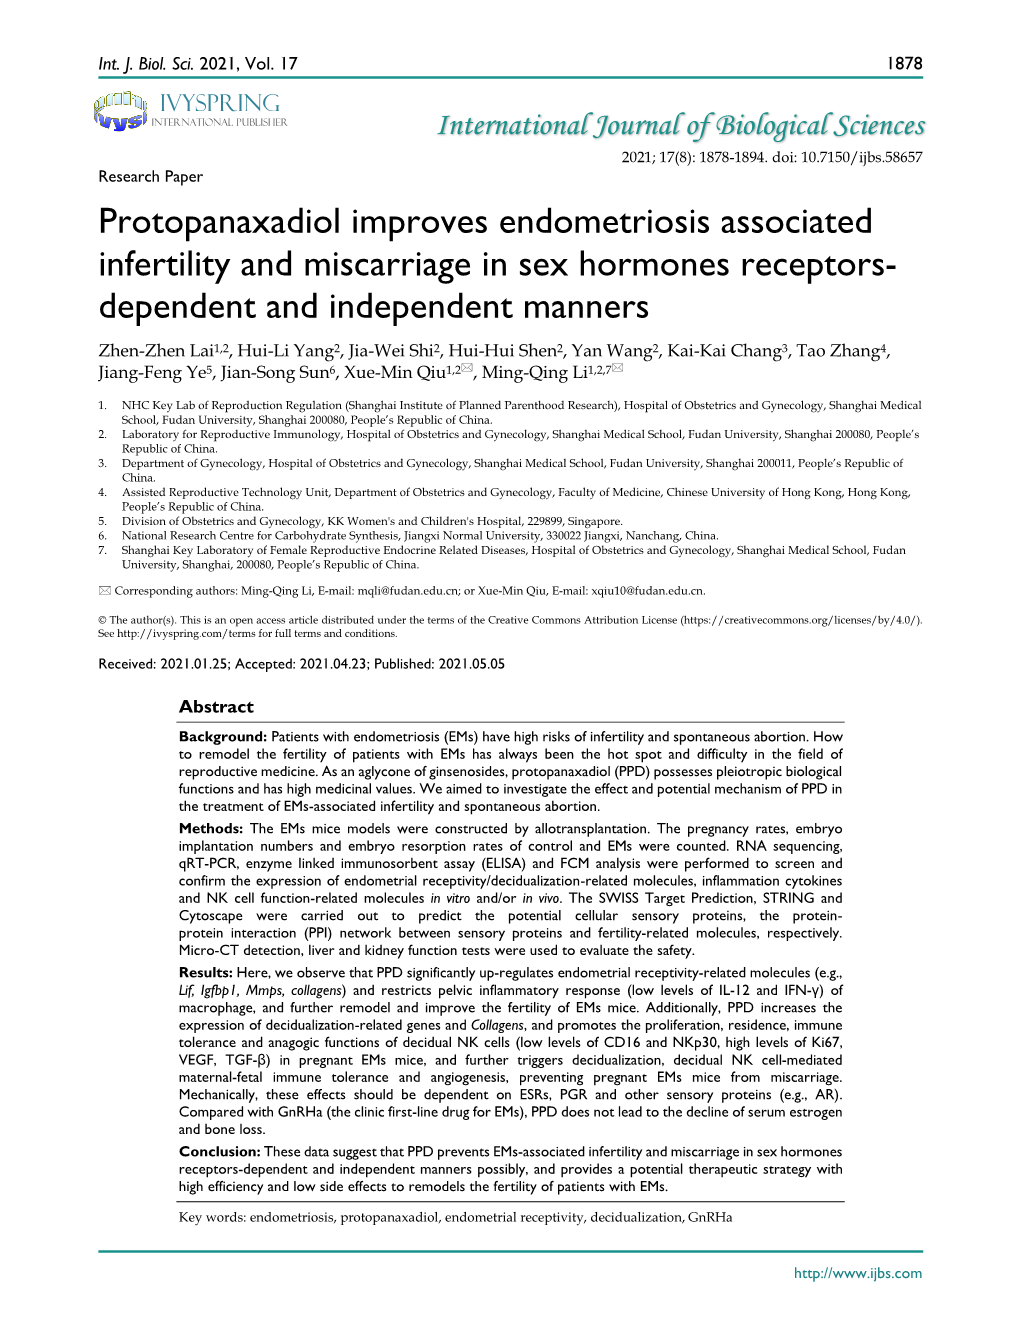 Protopanaxadiol Improves Endometriosis Associated Infertility